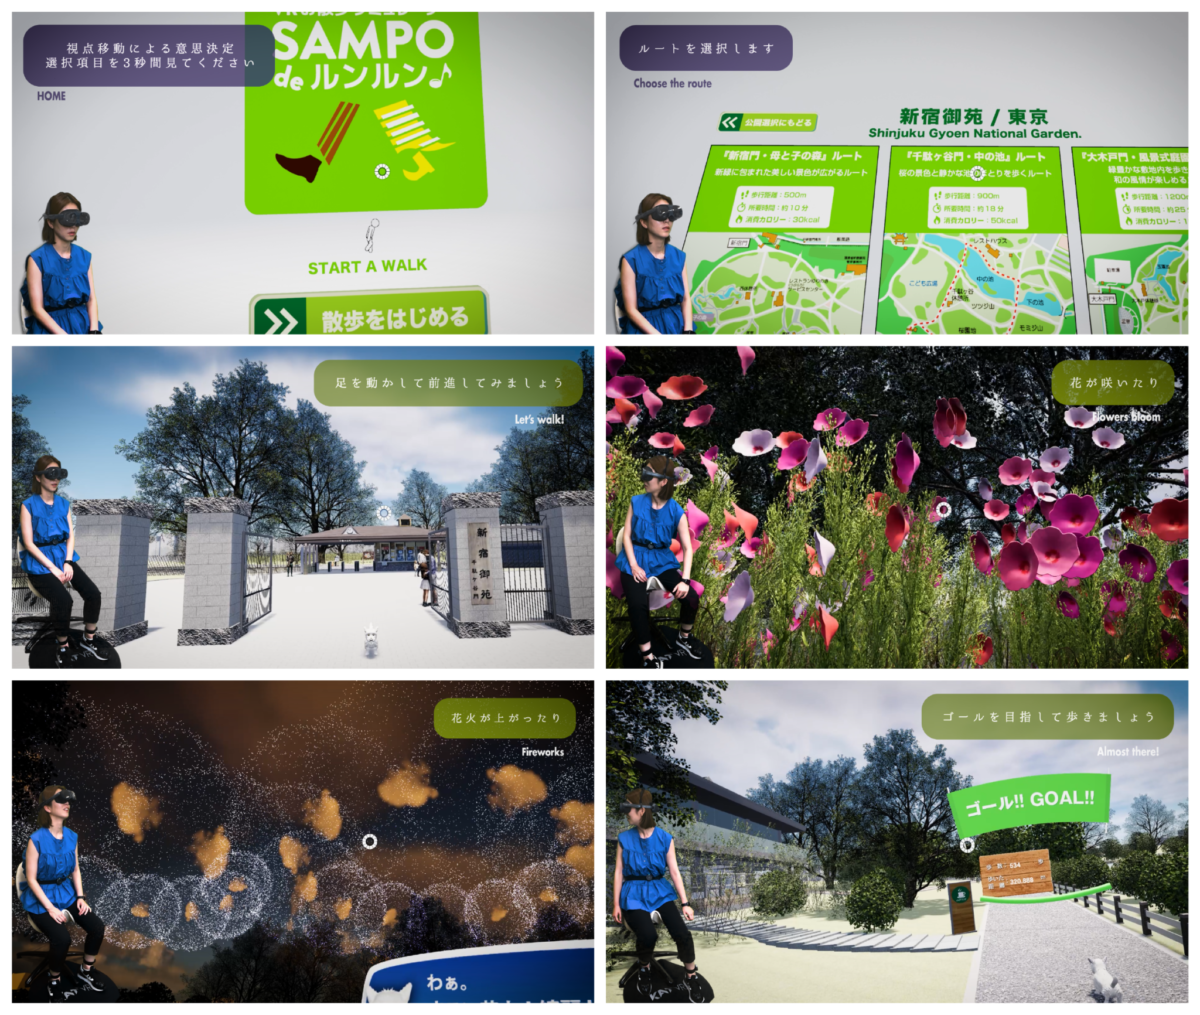 VRお散歩シミュレーター『SAMPO de ルンルン』実機体験会受付中です